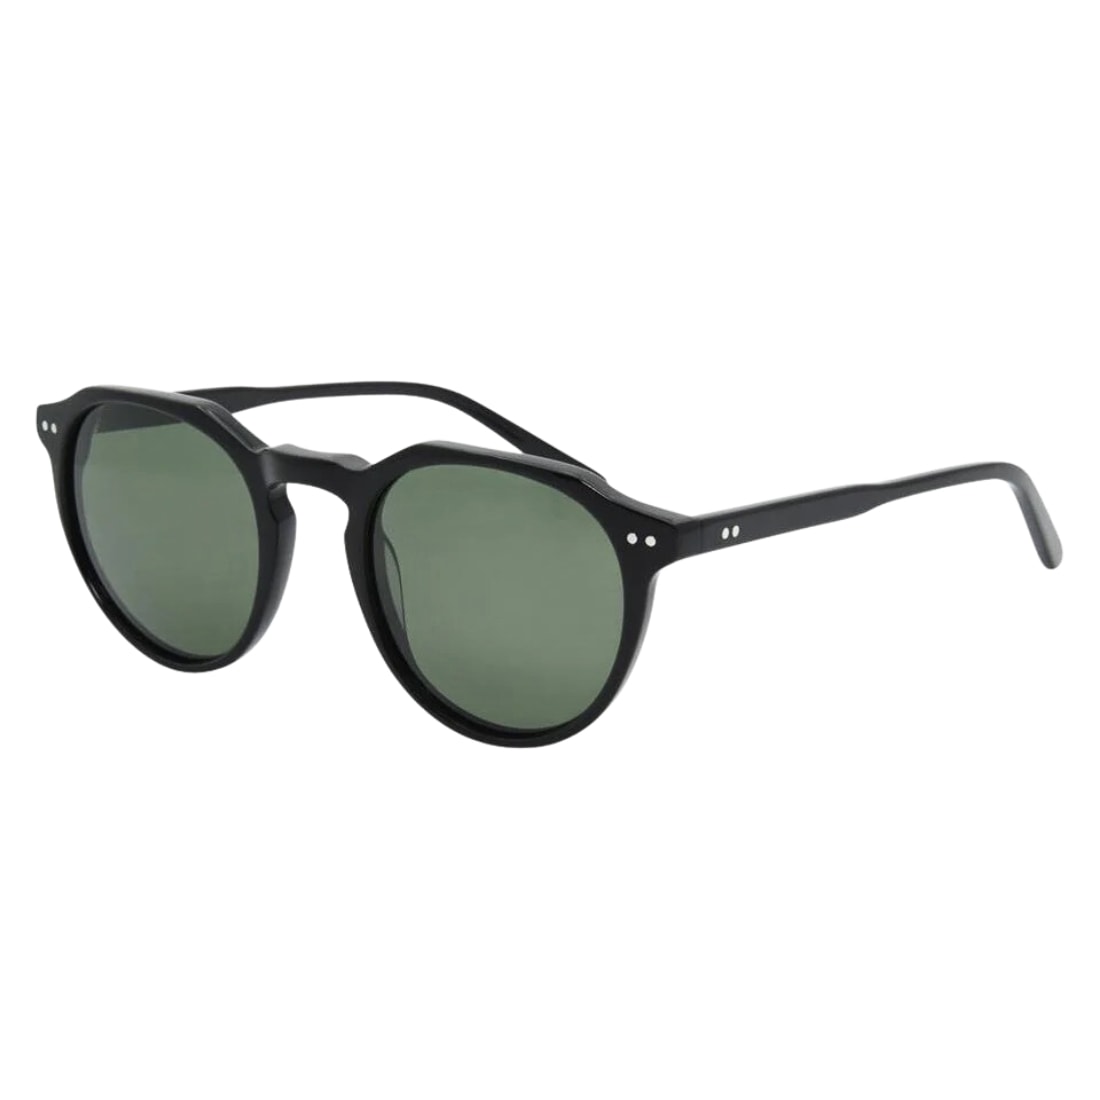 I-Sea Watty Round Polarised Sunglasses - Black Acetate/Green Polarized Lens - Round Sunglasses by I-Sea